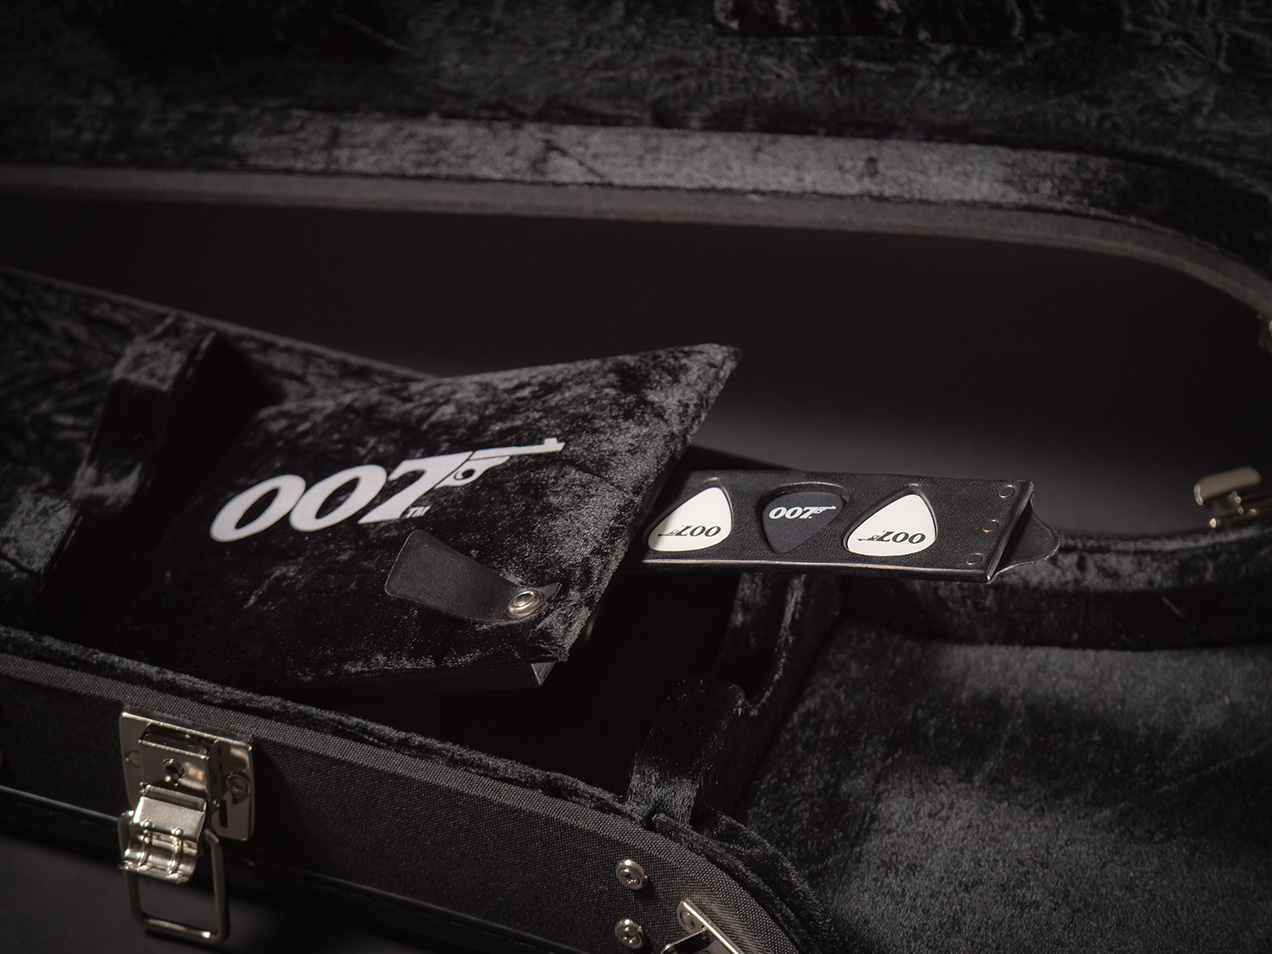 Limited Edition James Bond 007 Guitar by Duesenberg picks